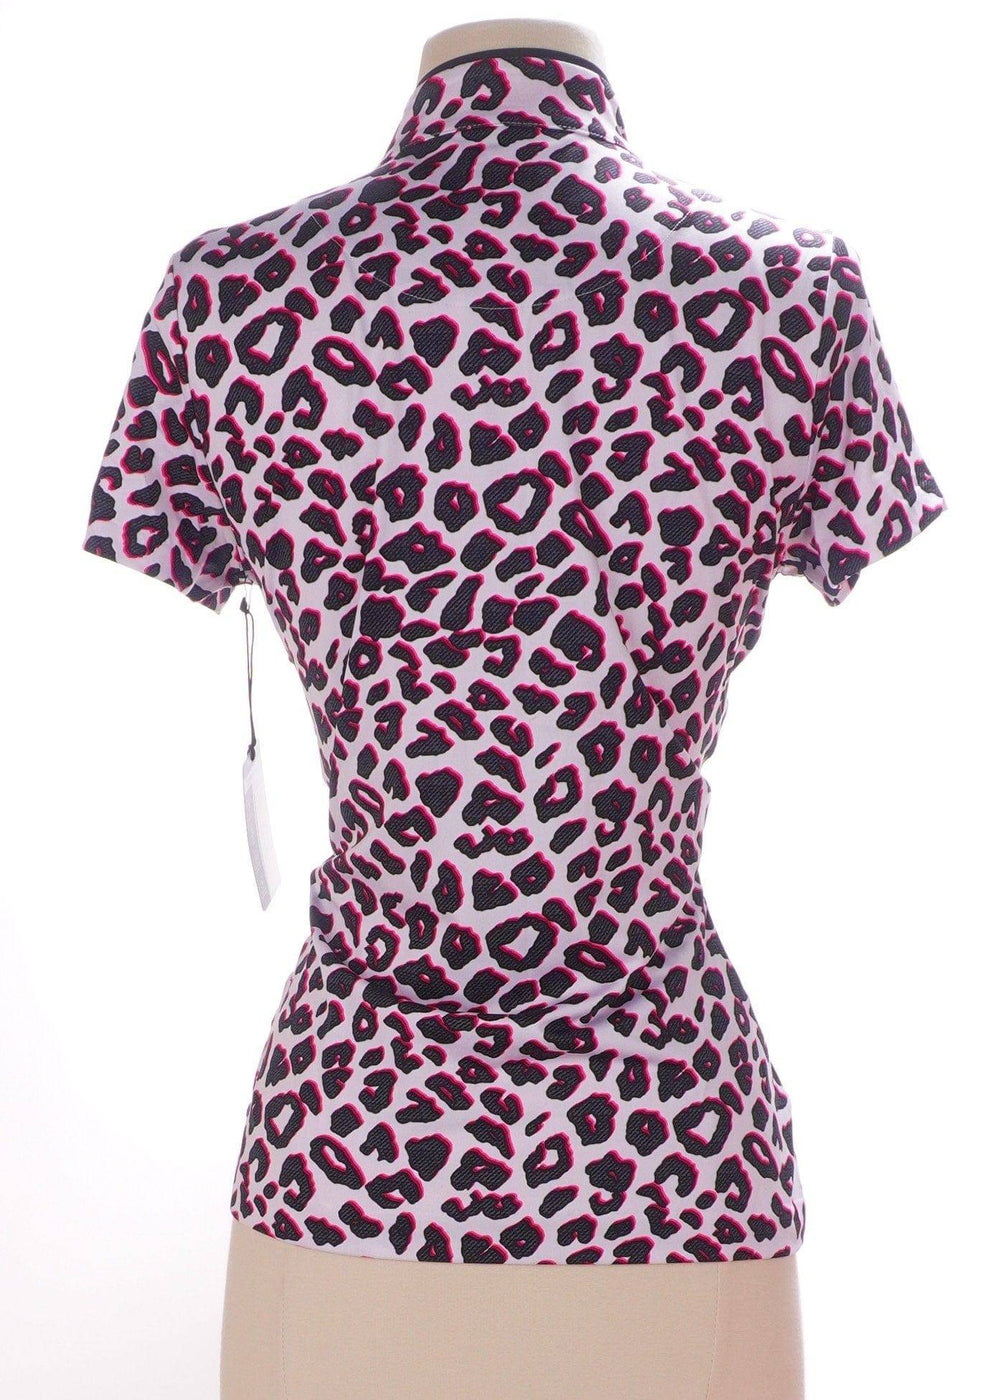 Tail Animal Print / Small Tail  Short Sleeve Top - Joli Cheetah - Size Small